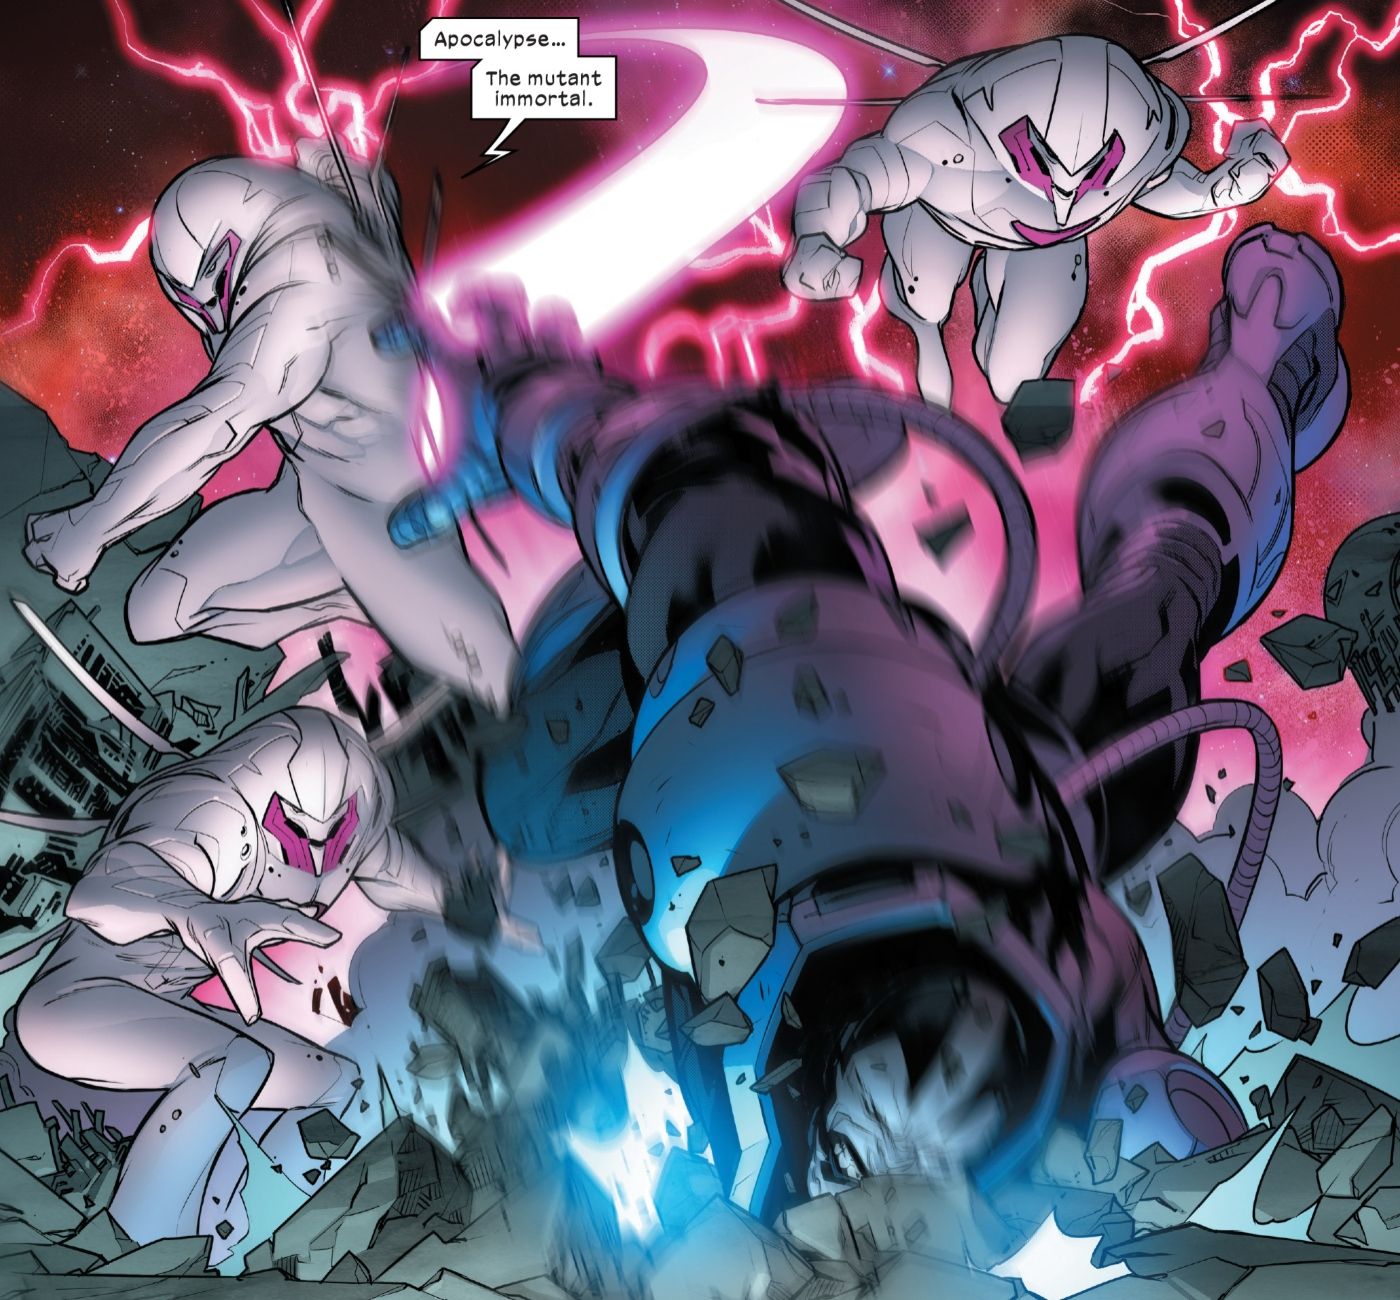 Nimrod dos X-Men derrotando Apocalipse. 